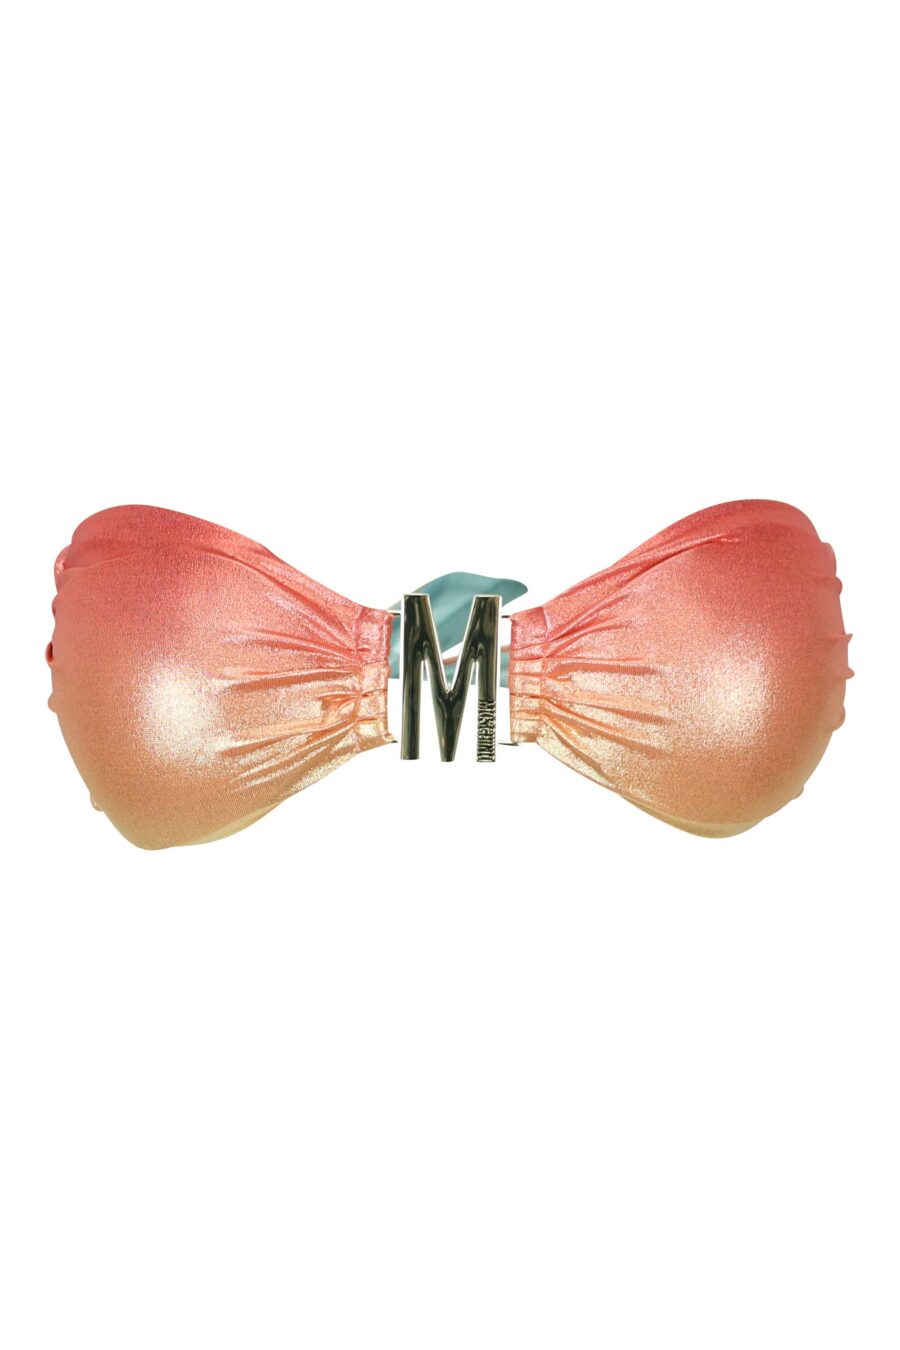 Top de bikini multicolor con logo "m" "lettering" dorado - 667113644493